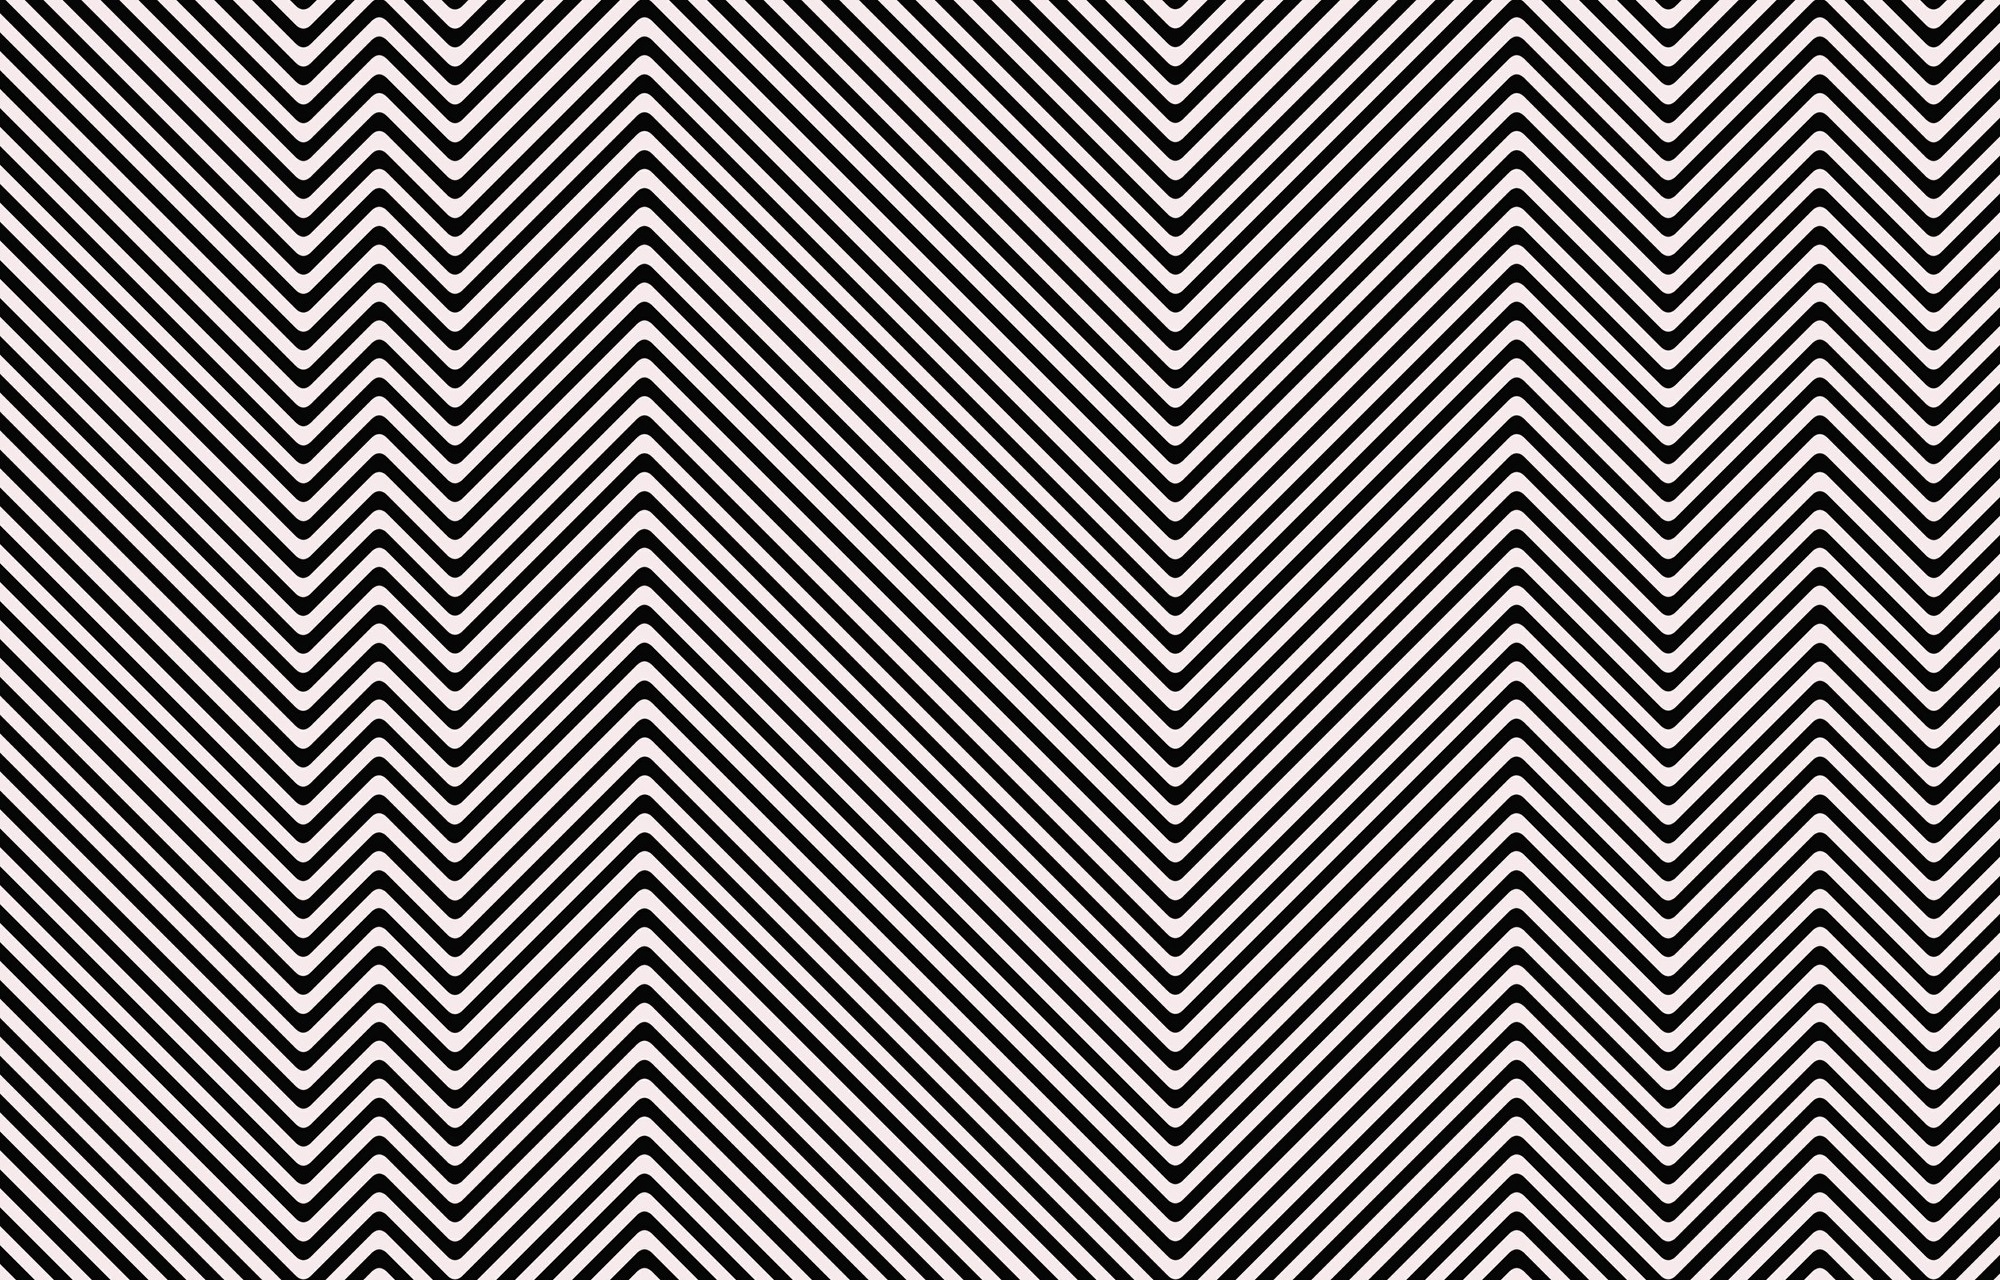 General 2000x1280 digital art optical illusion minimalism shapes